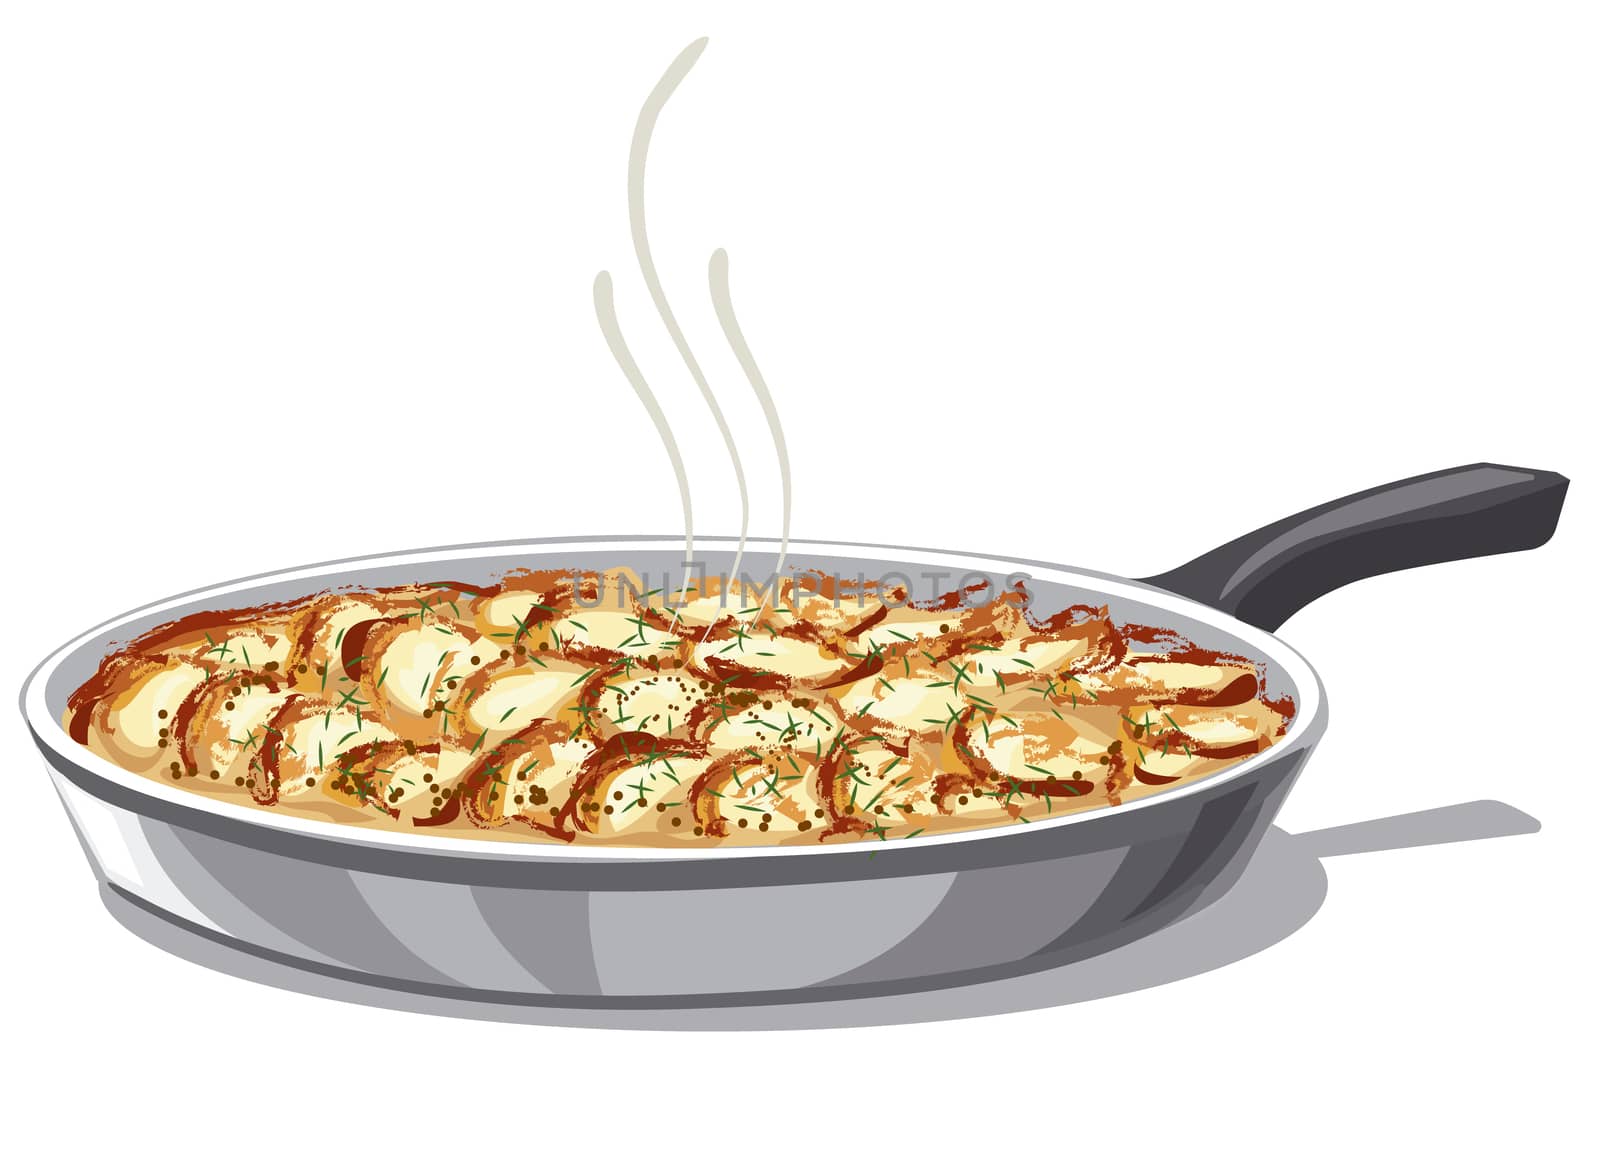 roasted baked potatoes by olegtoka